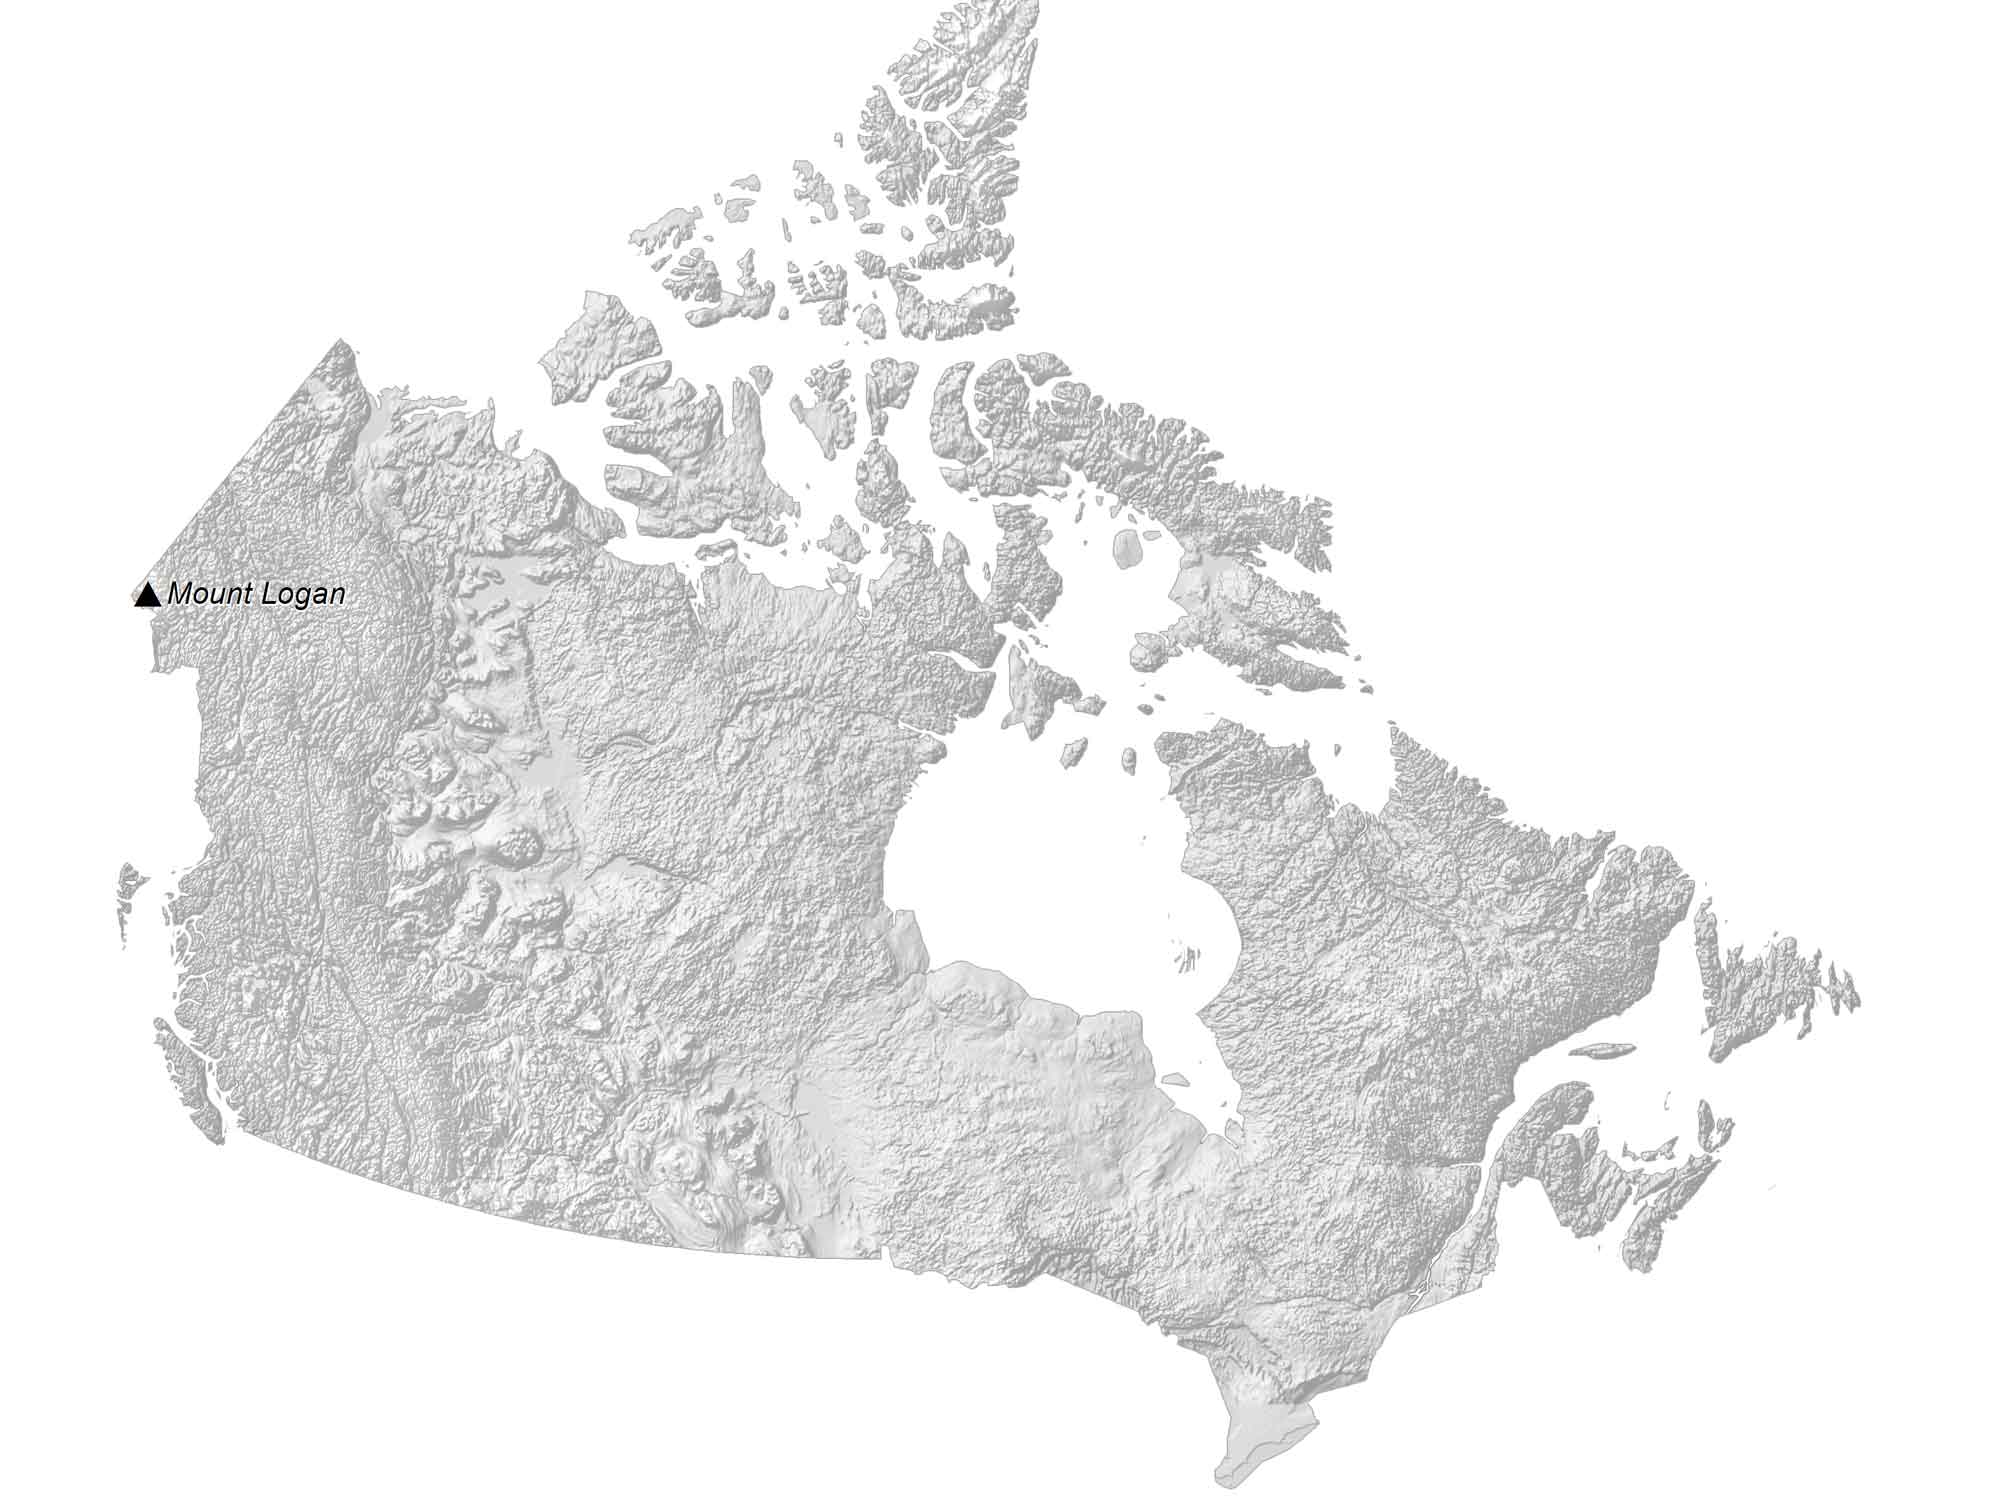 Canada Elevation Map